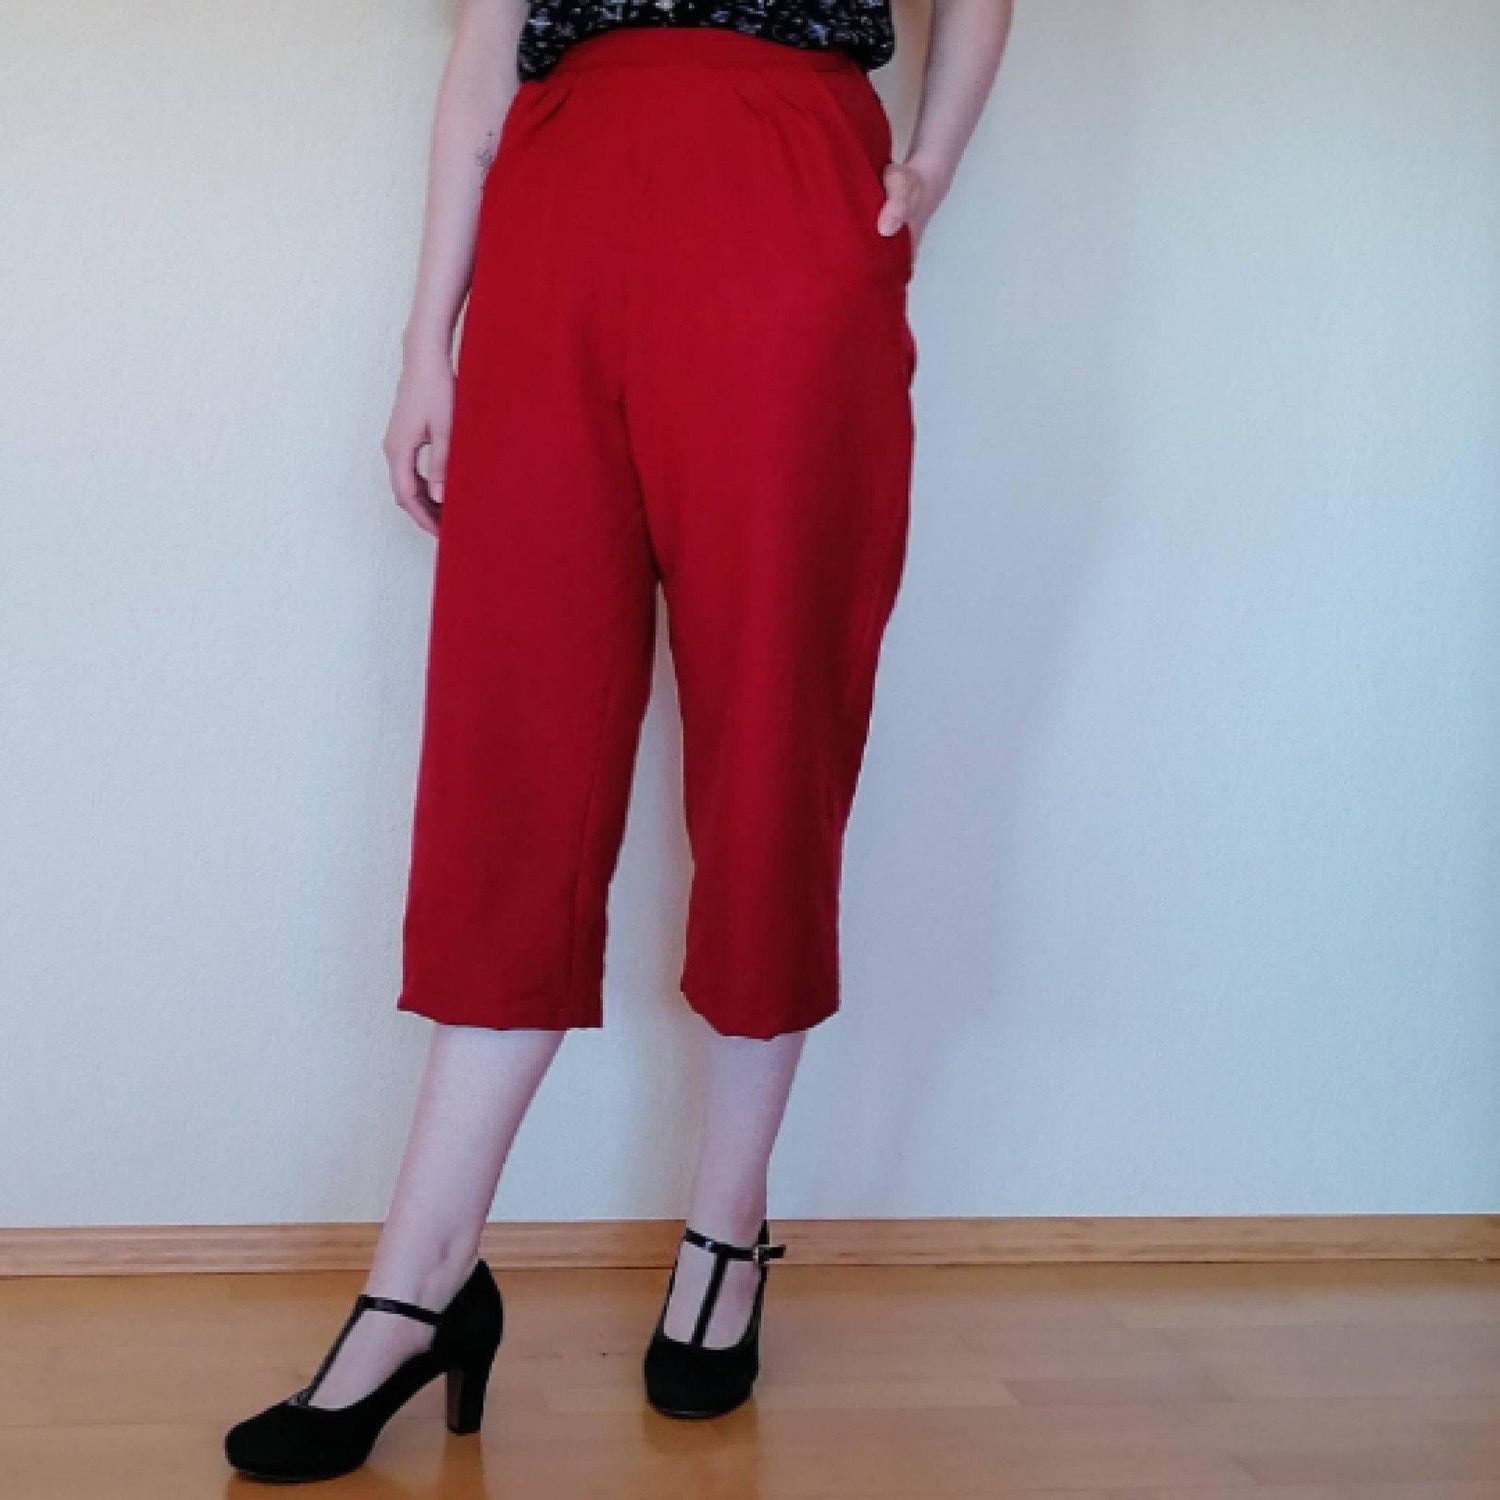 PDF - 1950's Sewing Pattern: Women's Pants Trousers Slacks - Multi